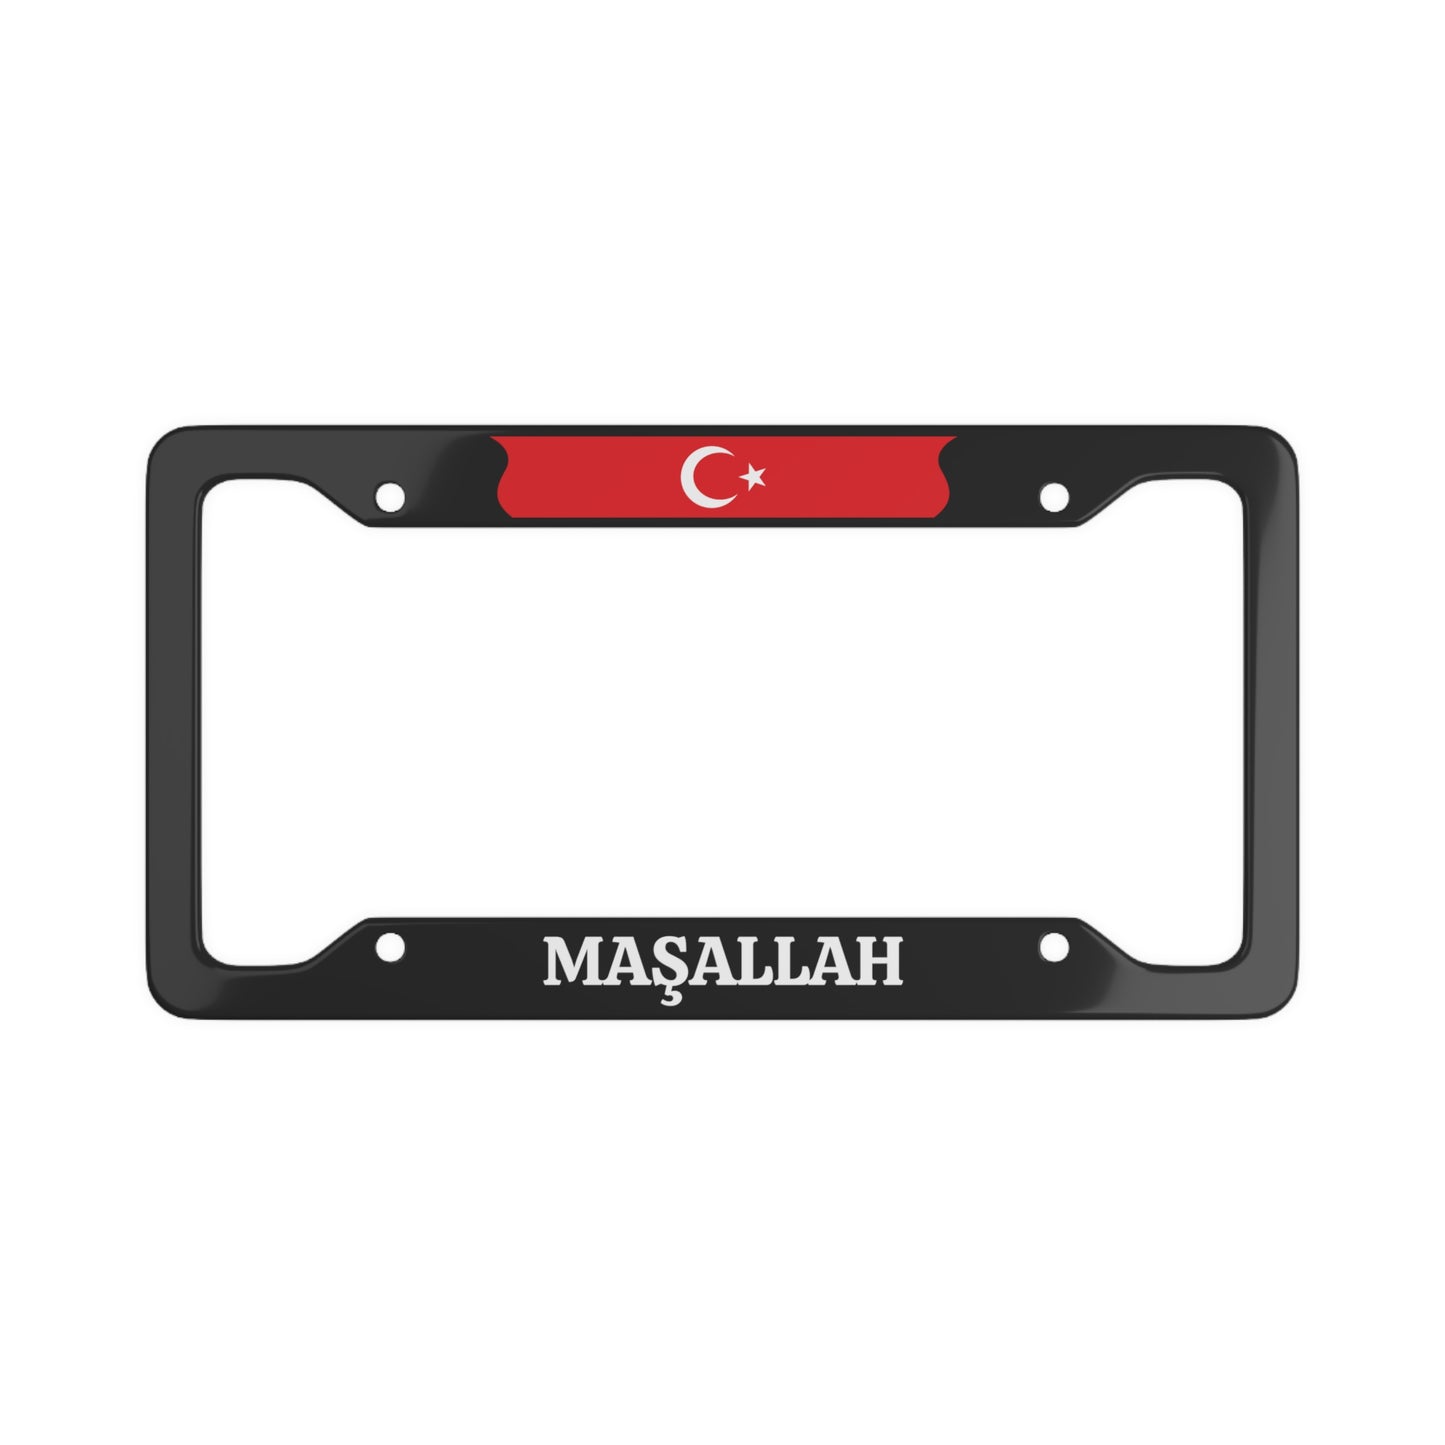 Mashallah License Plate Frame